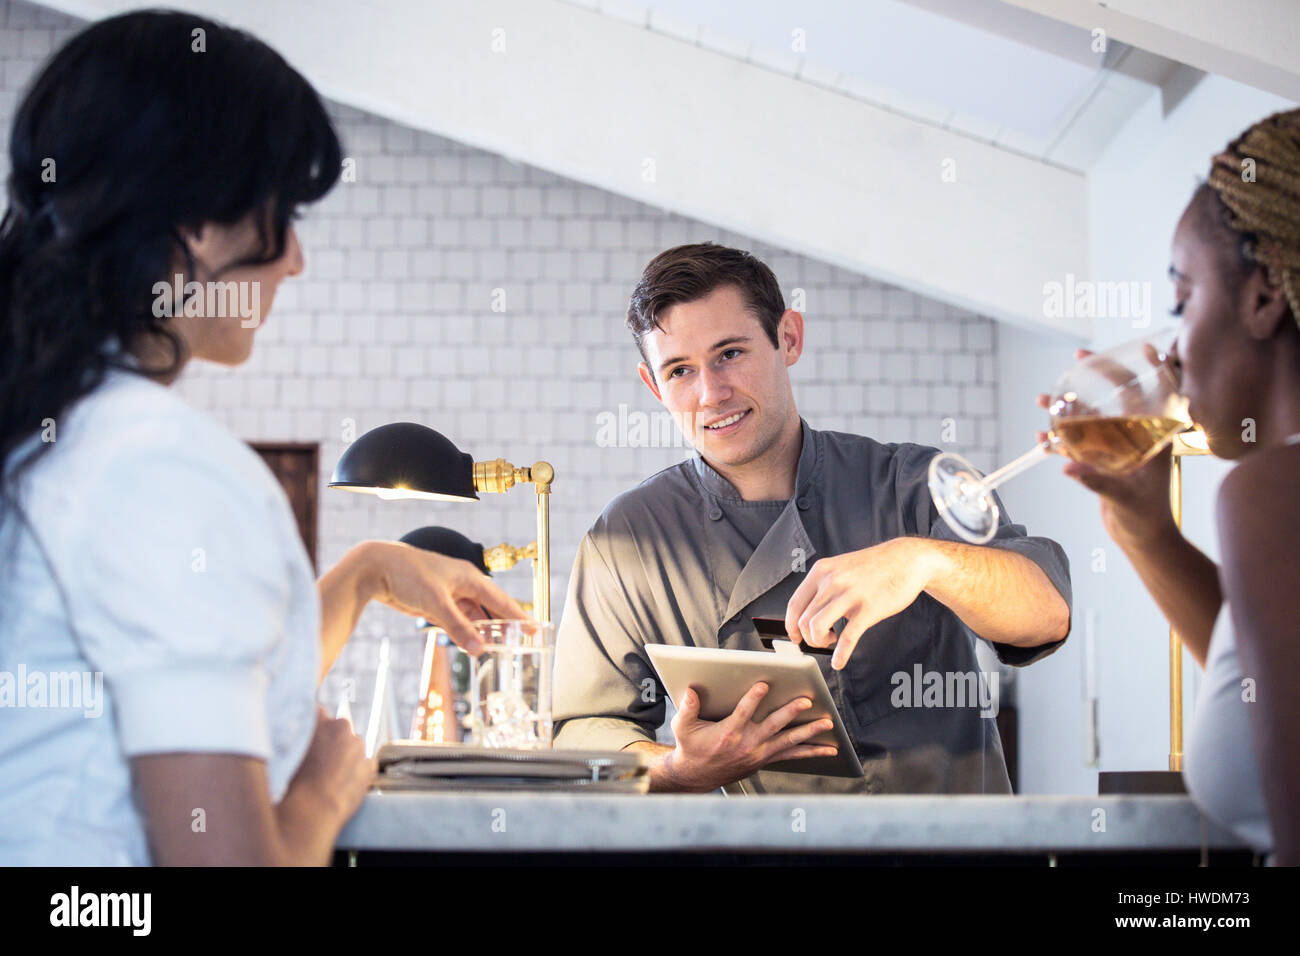 Barman serving customers at bar, barman using digital tablet to take payment Stock Photo